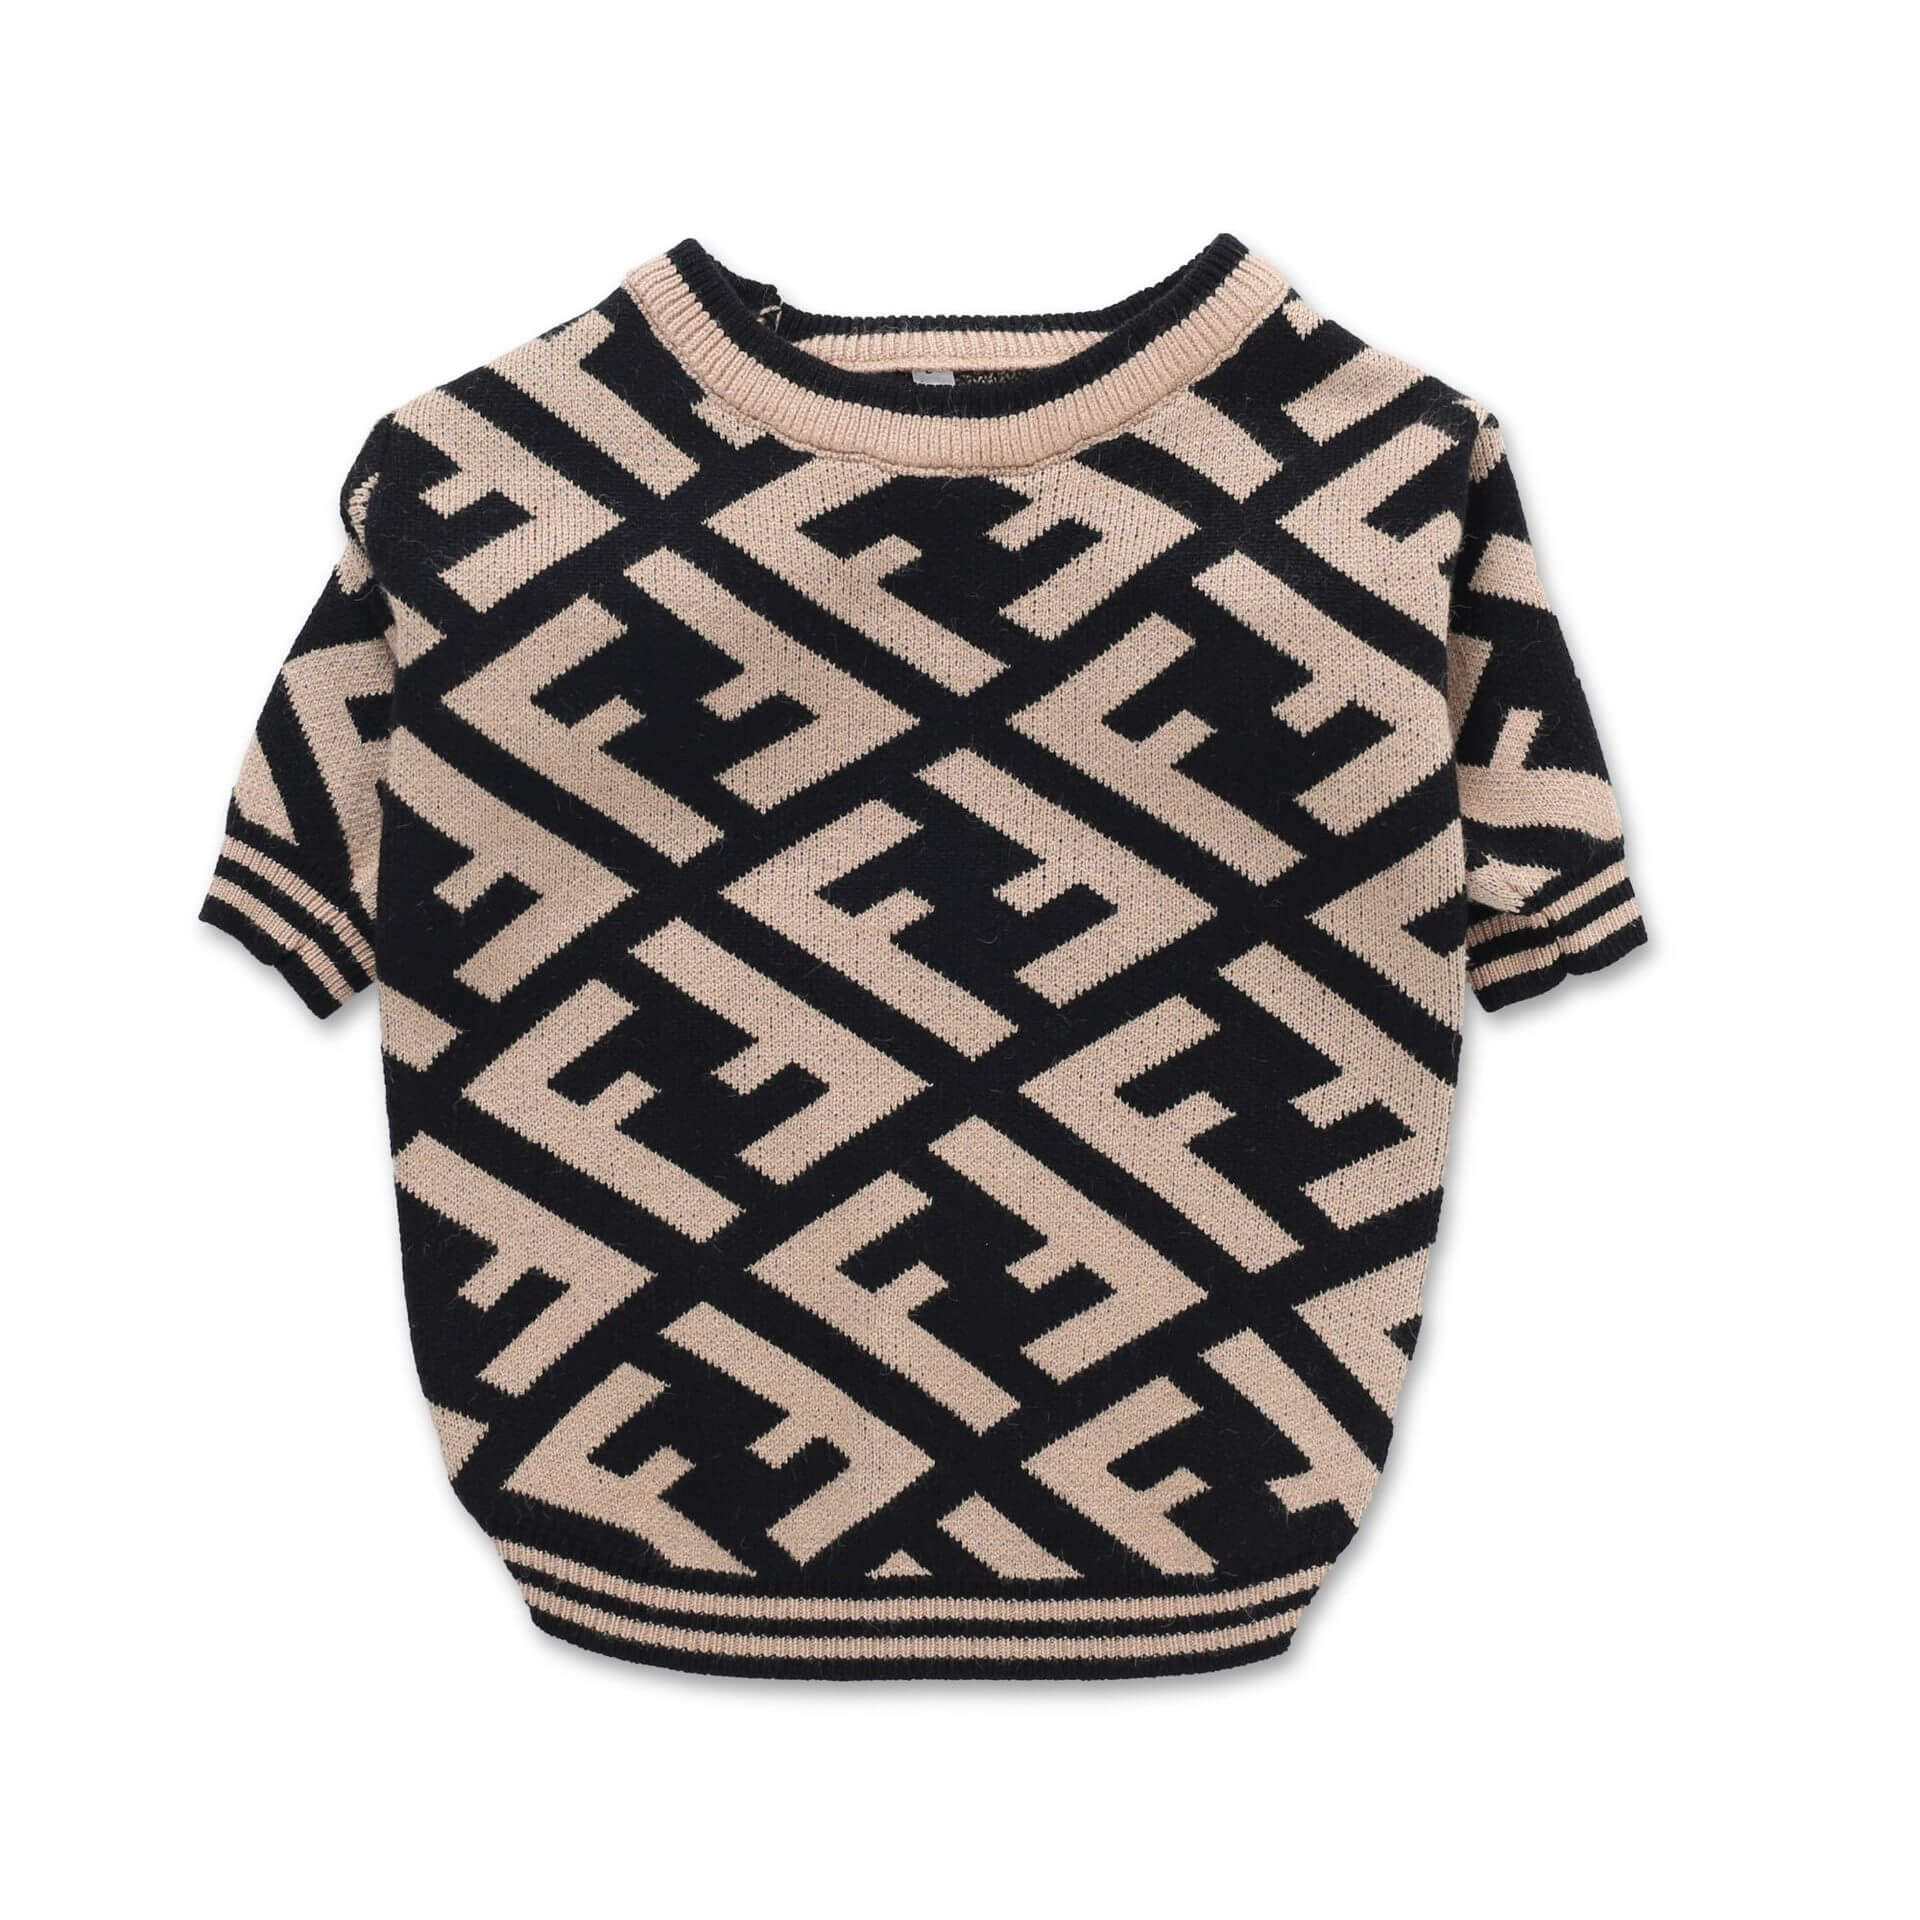 Fendi designer dog sweater | Luxury Dog Wool Sweater, Best w039 ...